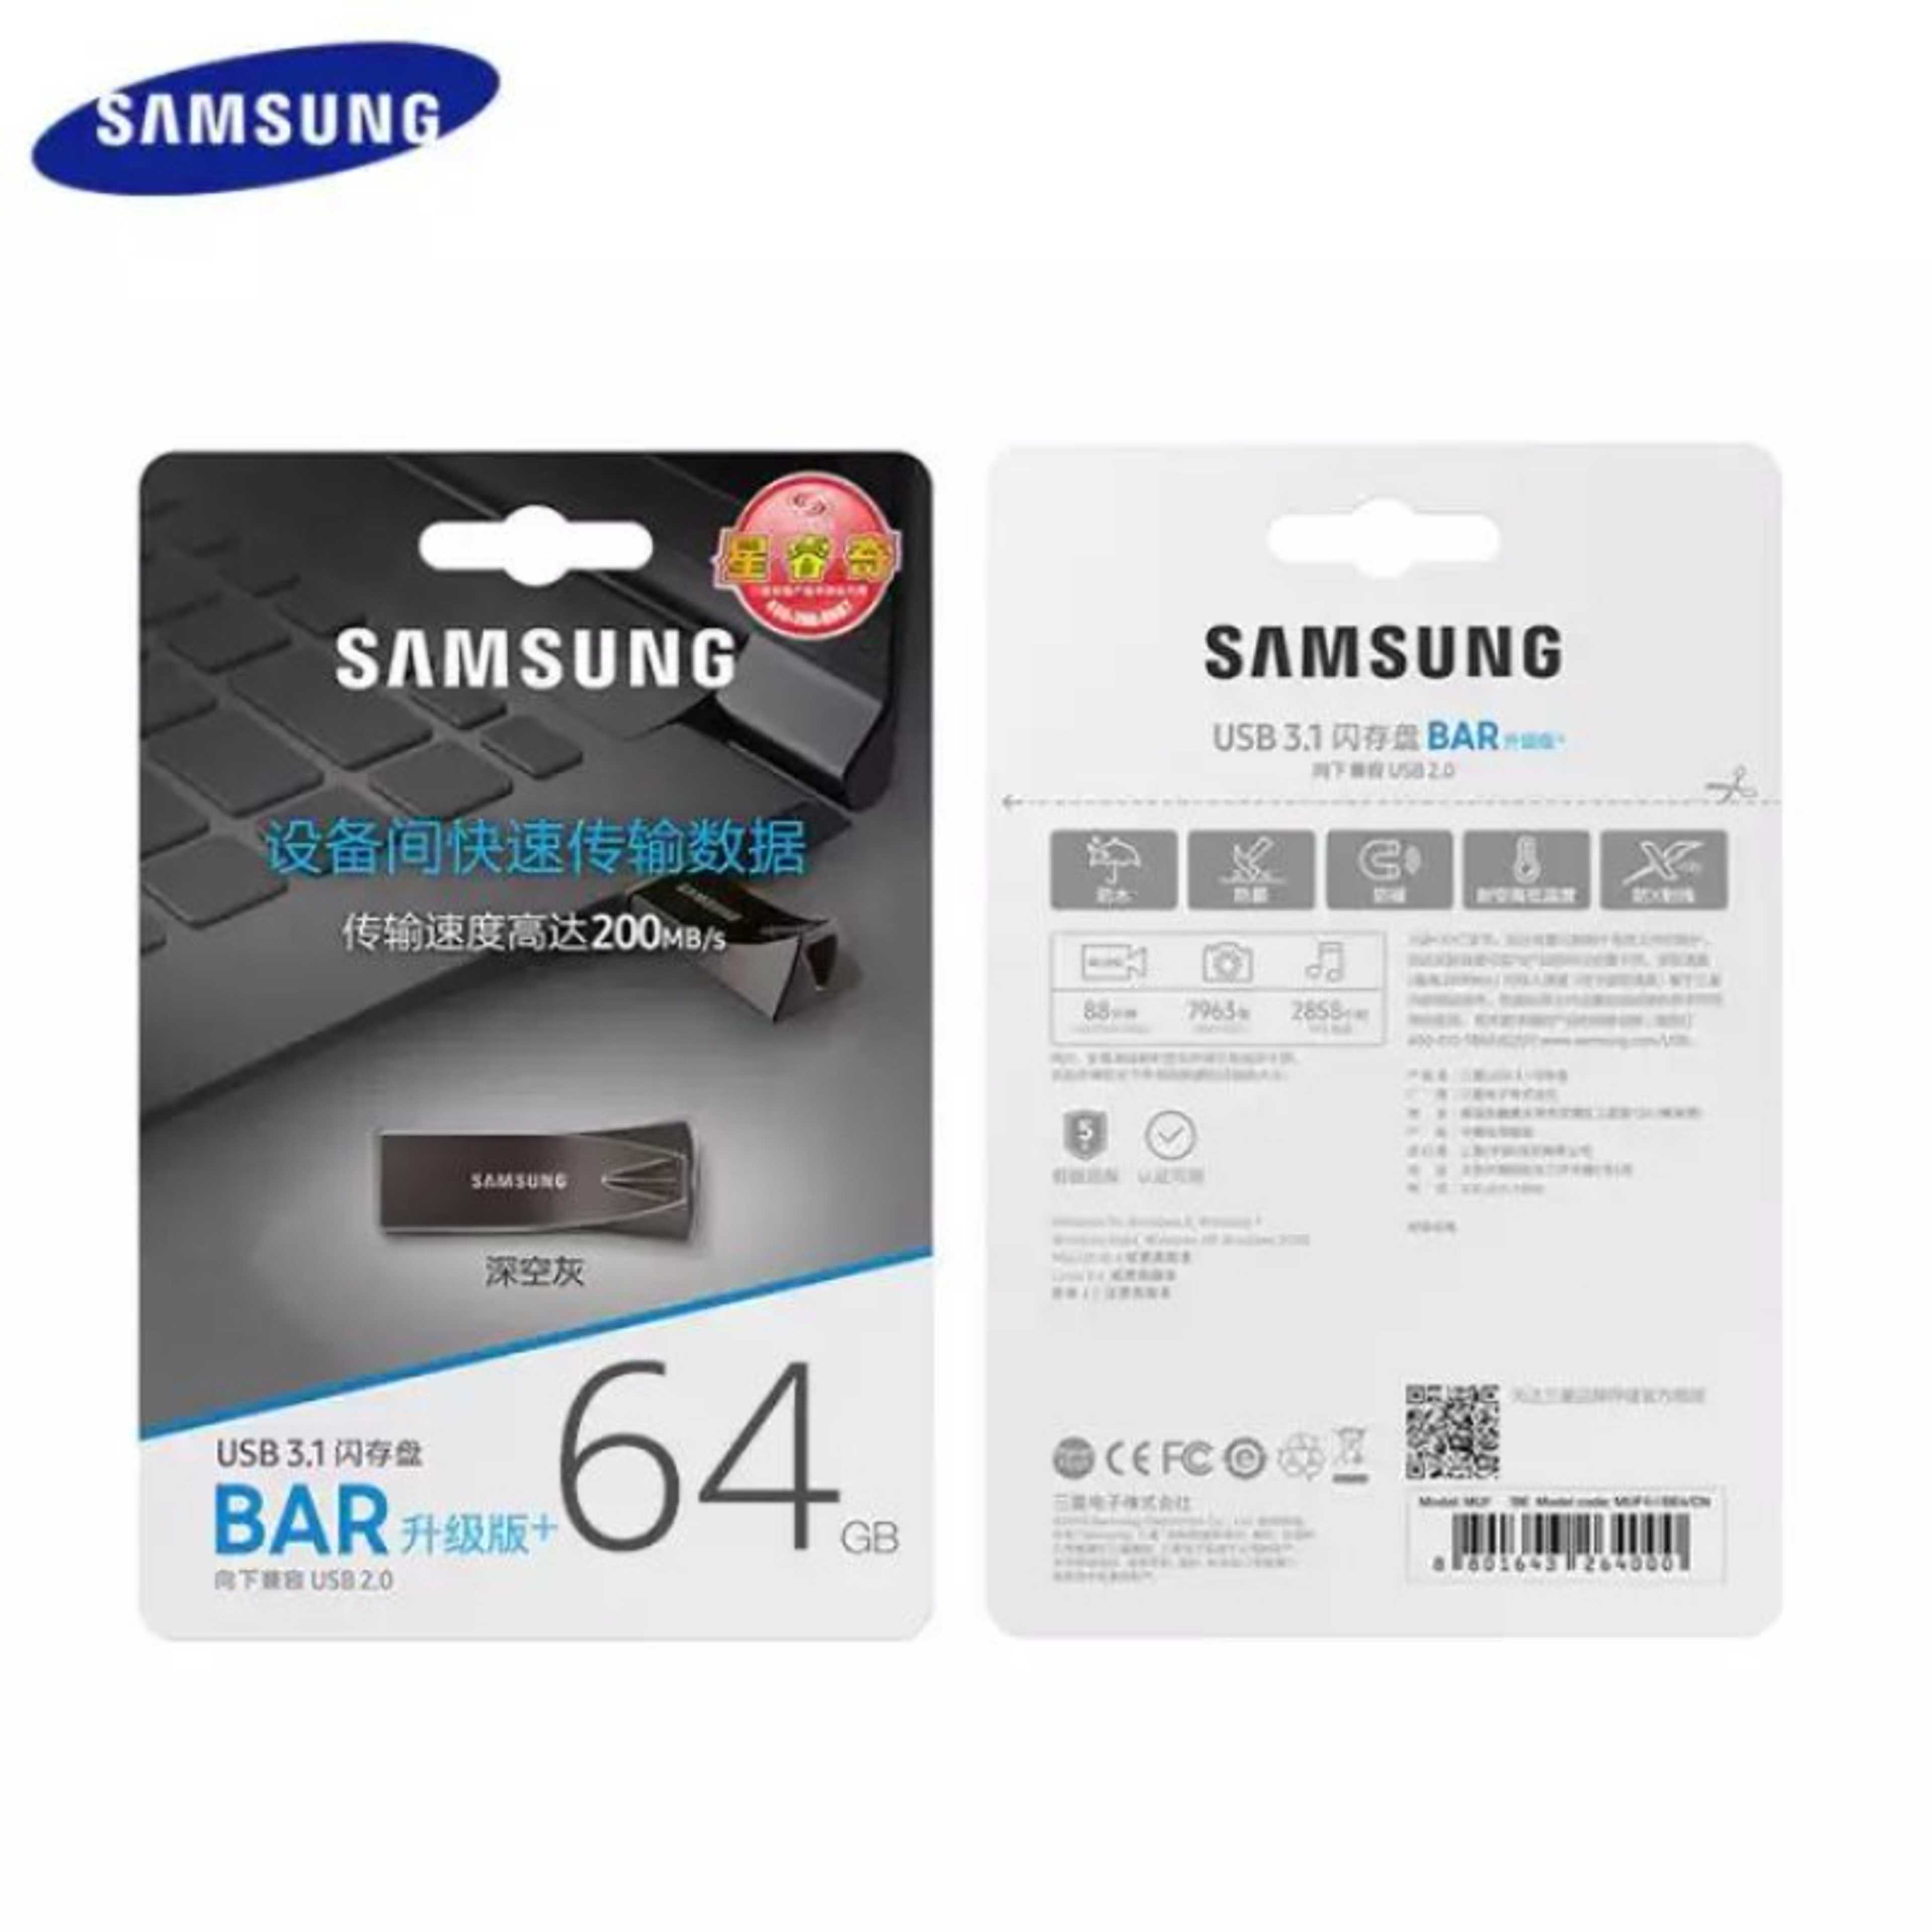 Samsung USB 3.1 Flash Drive BAR Plus - Carbon Gray 64GB